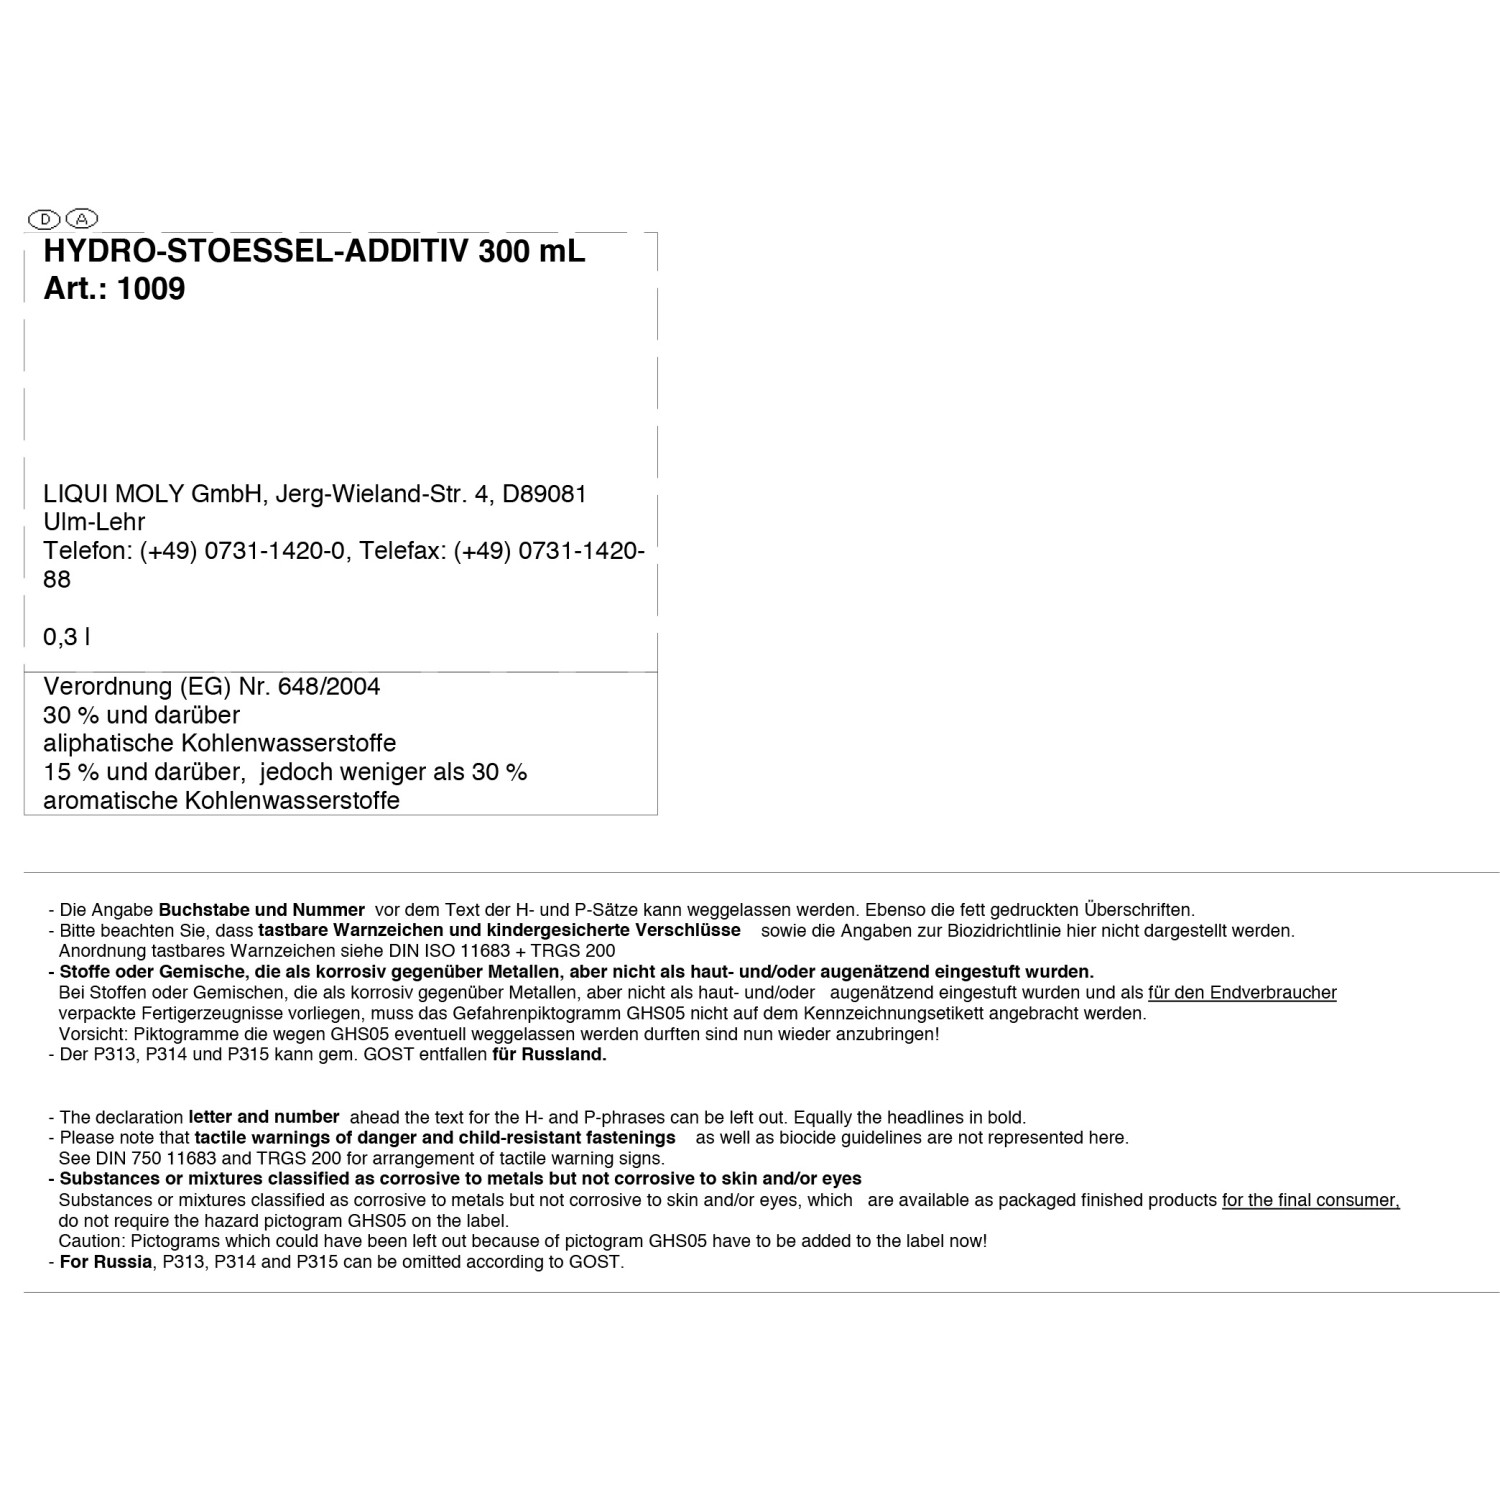 Liqui Moly Hydro-Stößel-Additiv 300 ml kaufen bei OBI